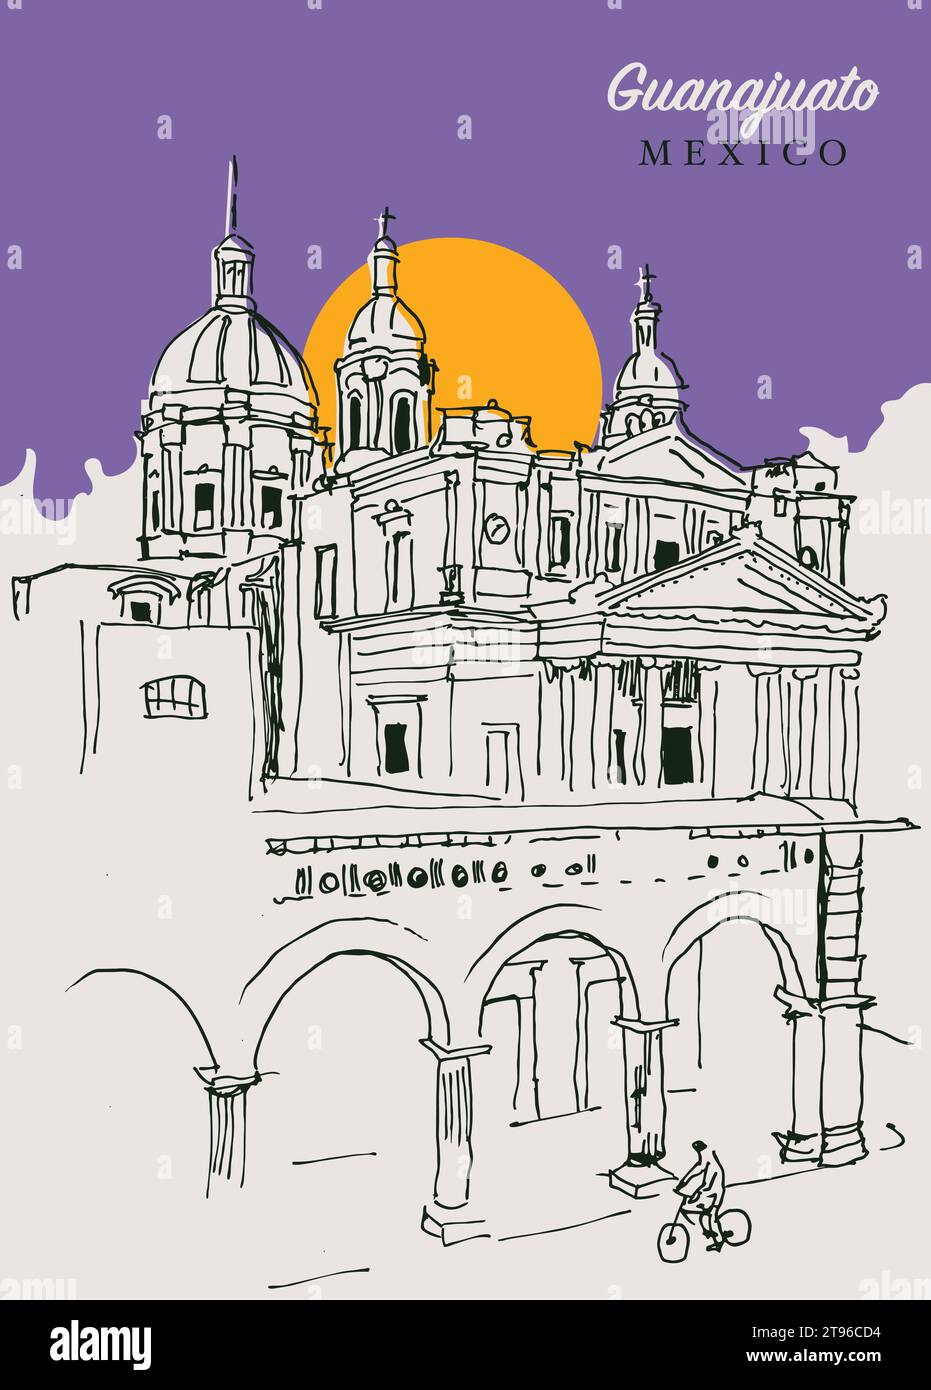 Vector hand drawn sketch illustration of the San Jose Iturbide church in Guanajuato, Mexico. Stock Vector